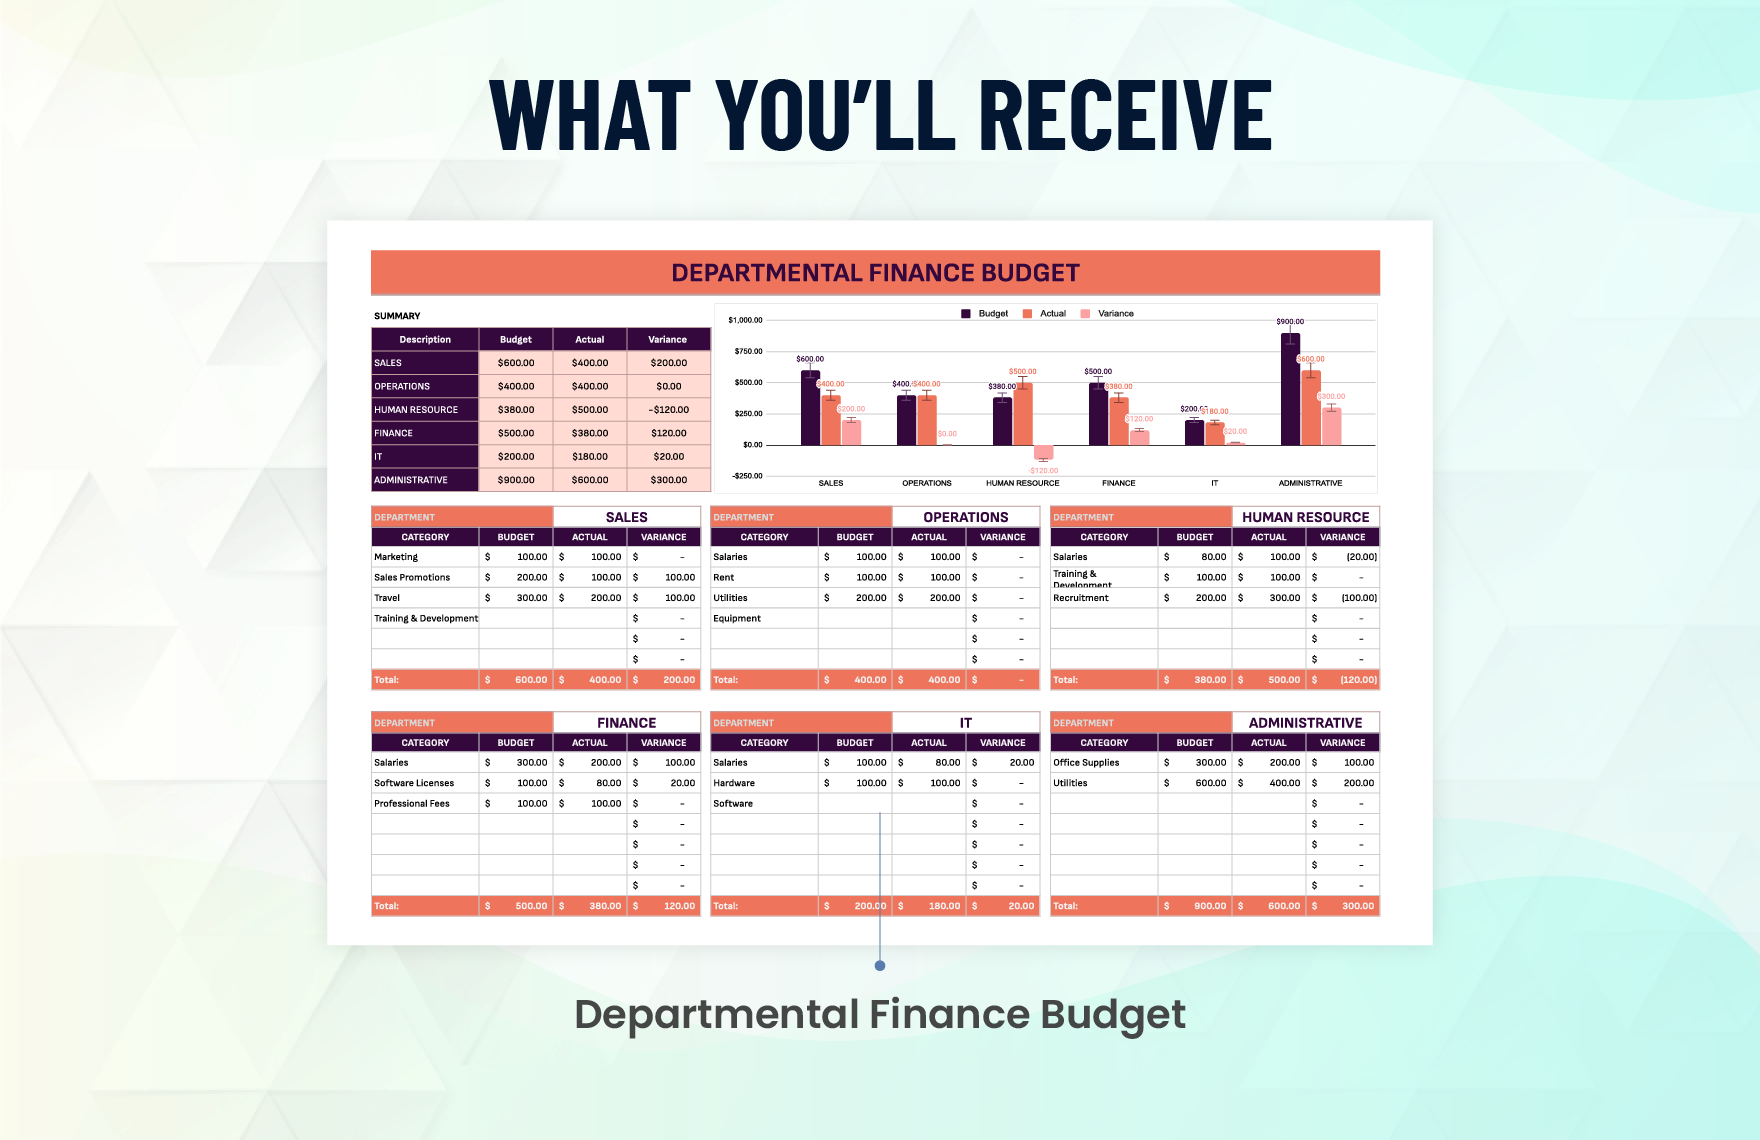 Departmental Finance Budget Allocation Template